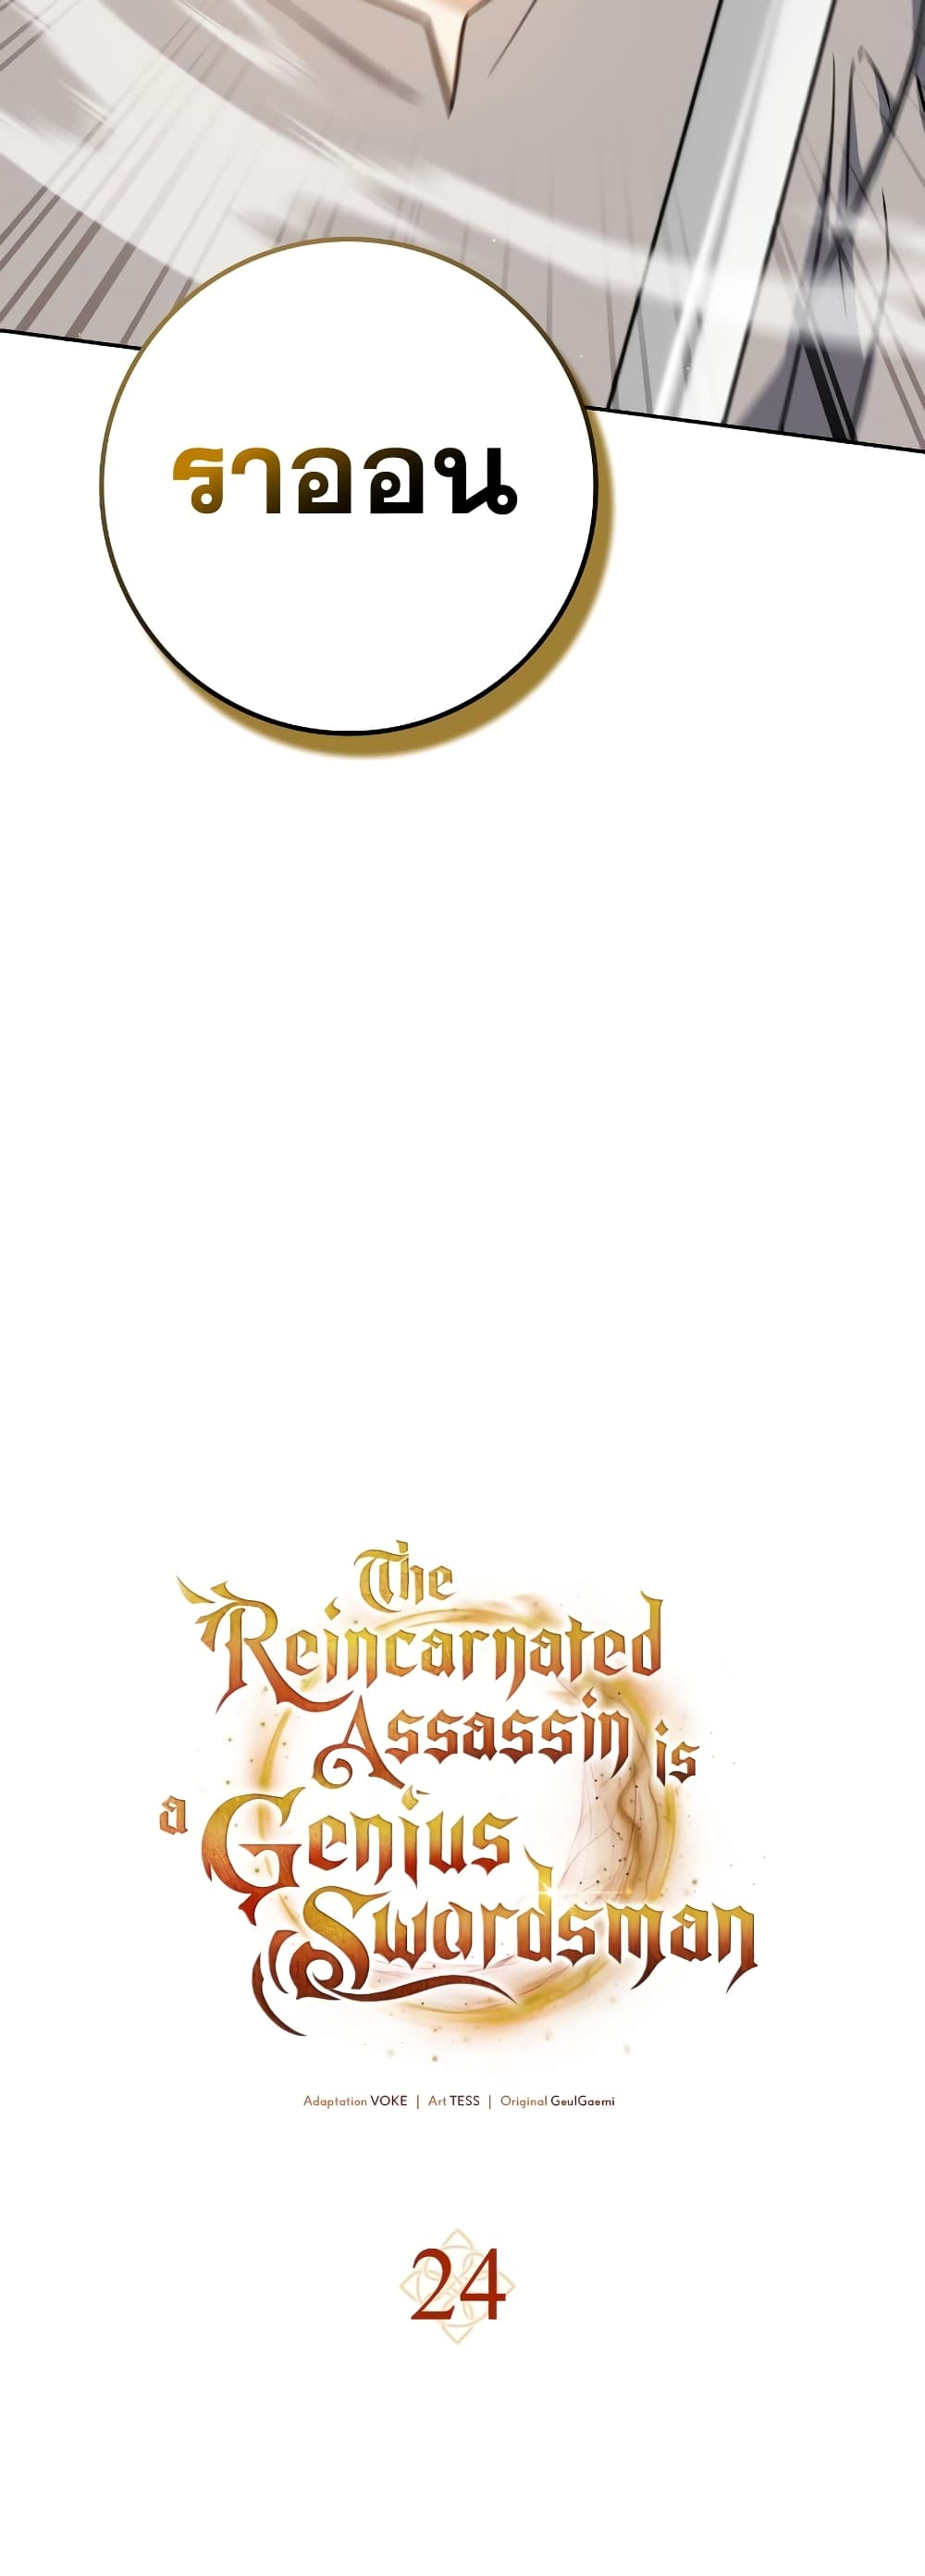 The Reincarnated Assassin is a Genius Swordsman 24-24